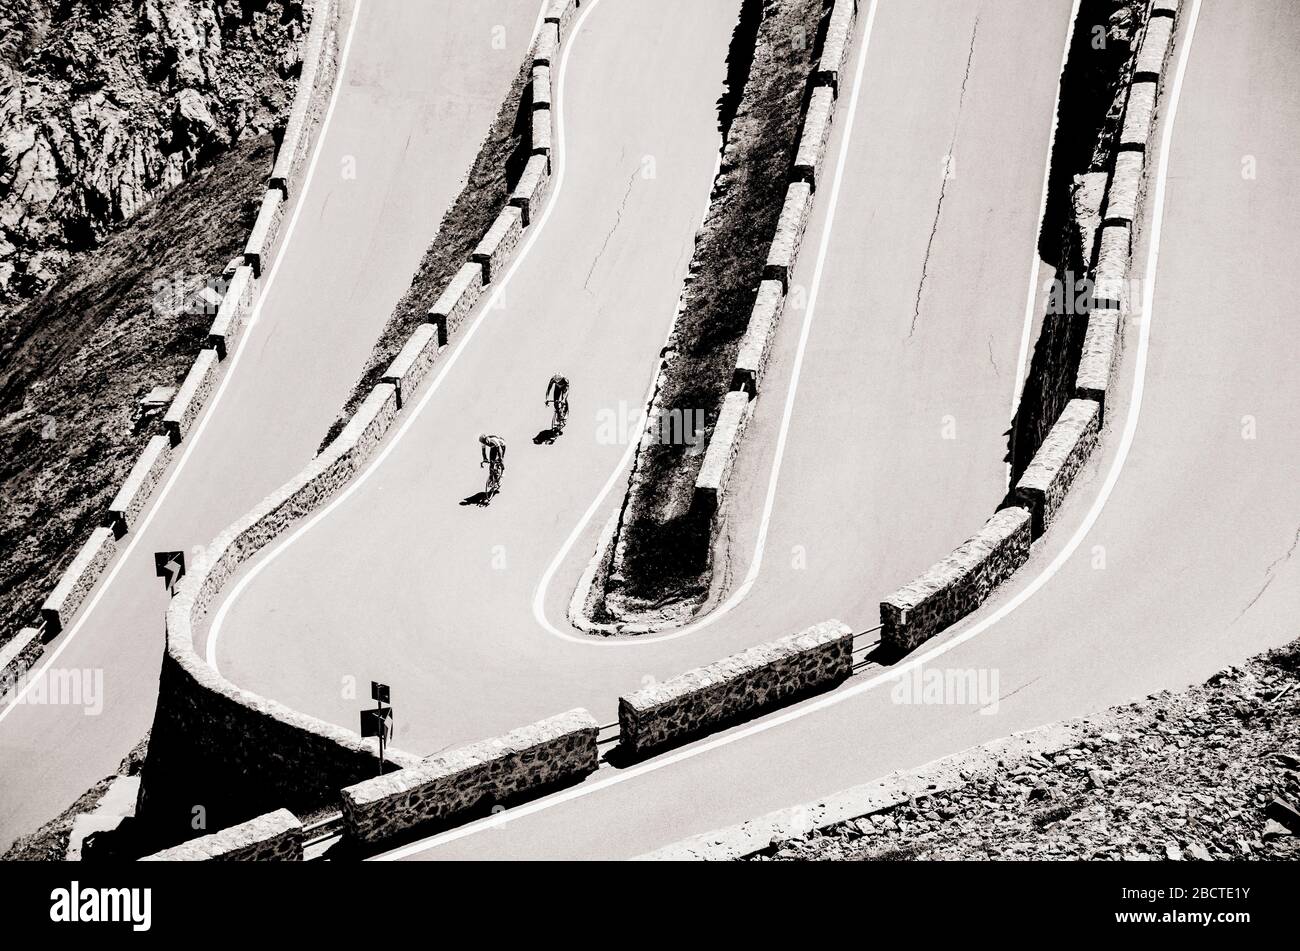 Biker on the road - Cyclist photo. Tour, Italy, Passo dello Stelvio Stock Photo